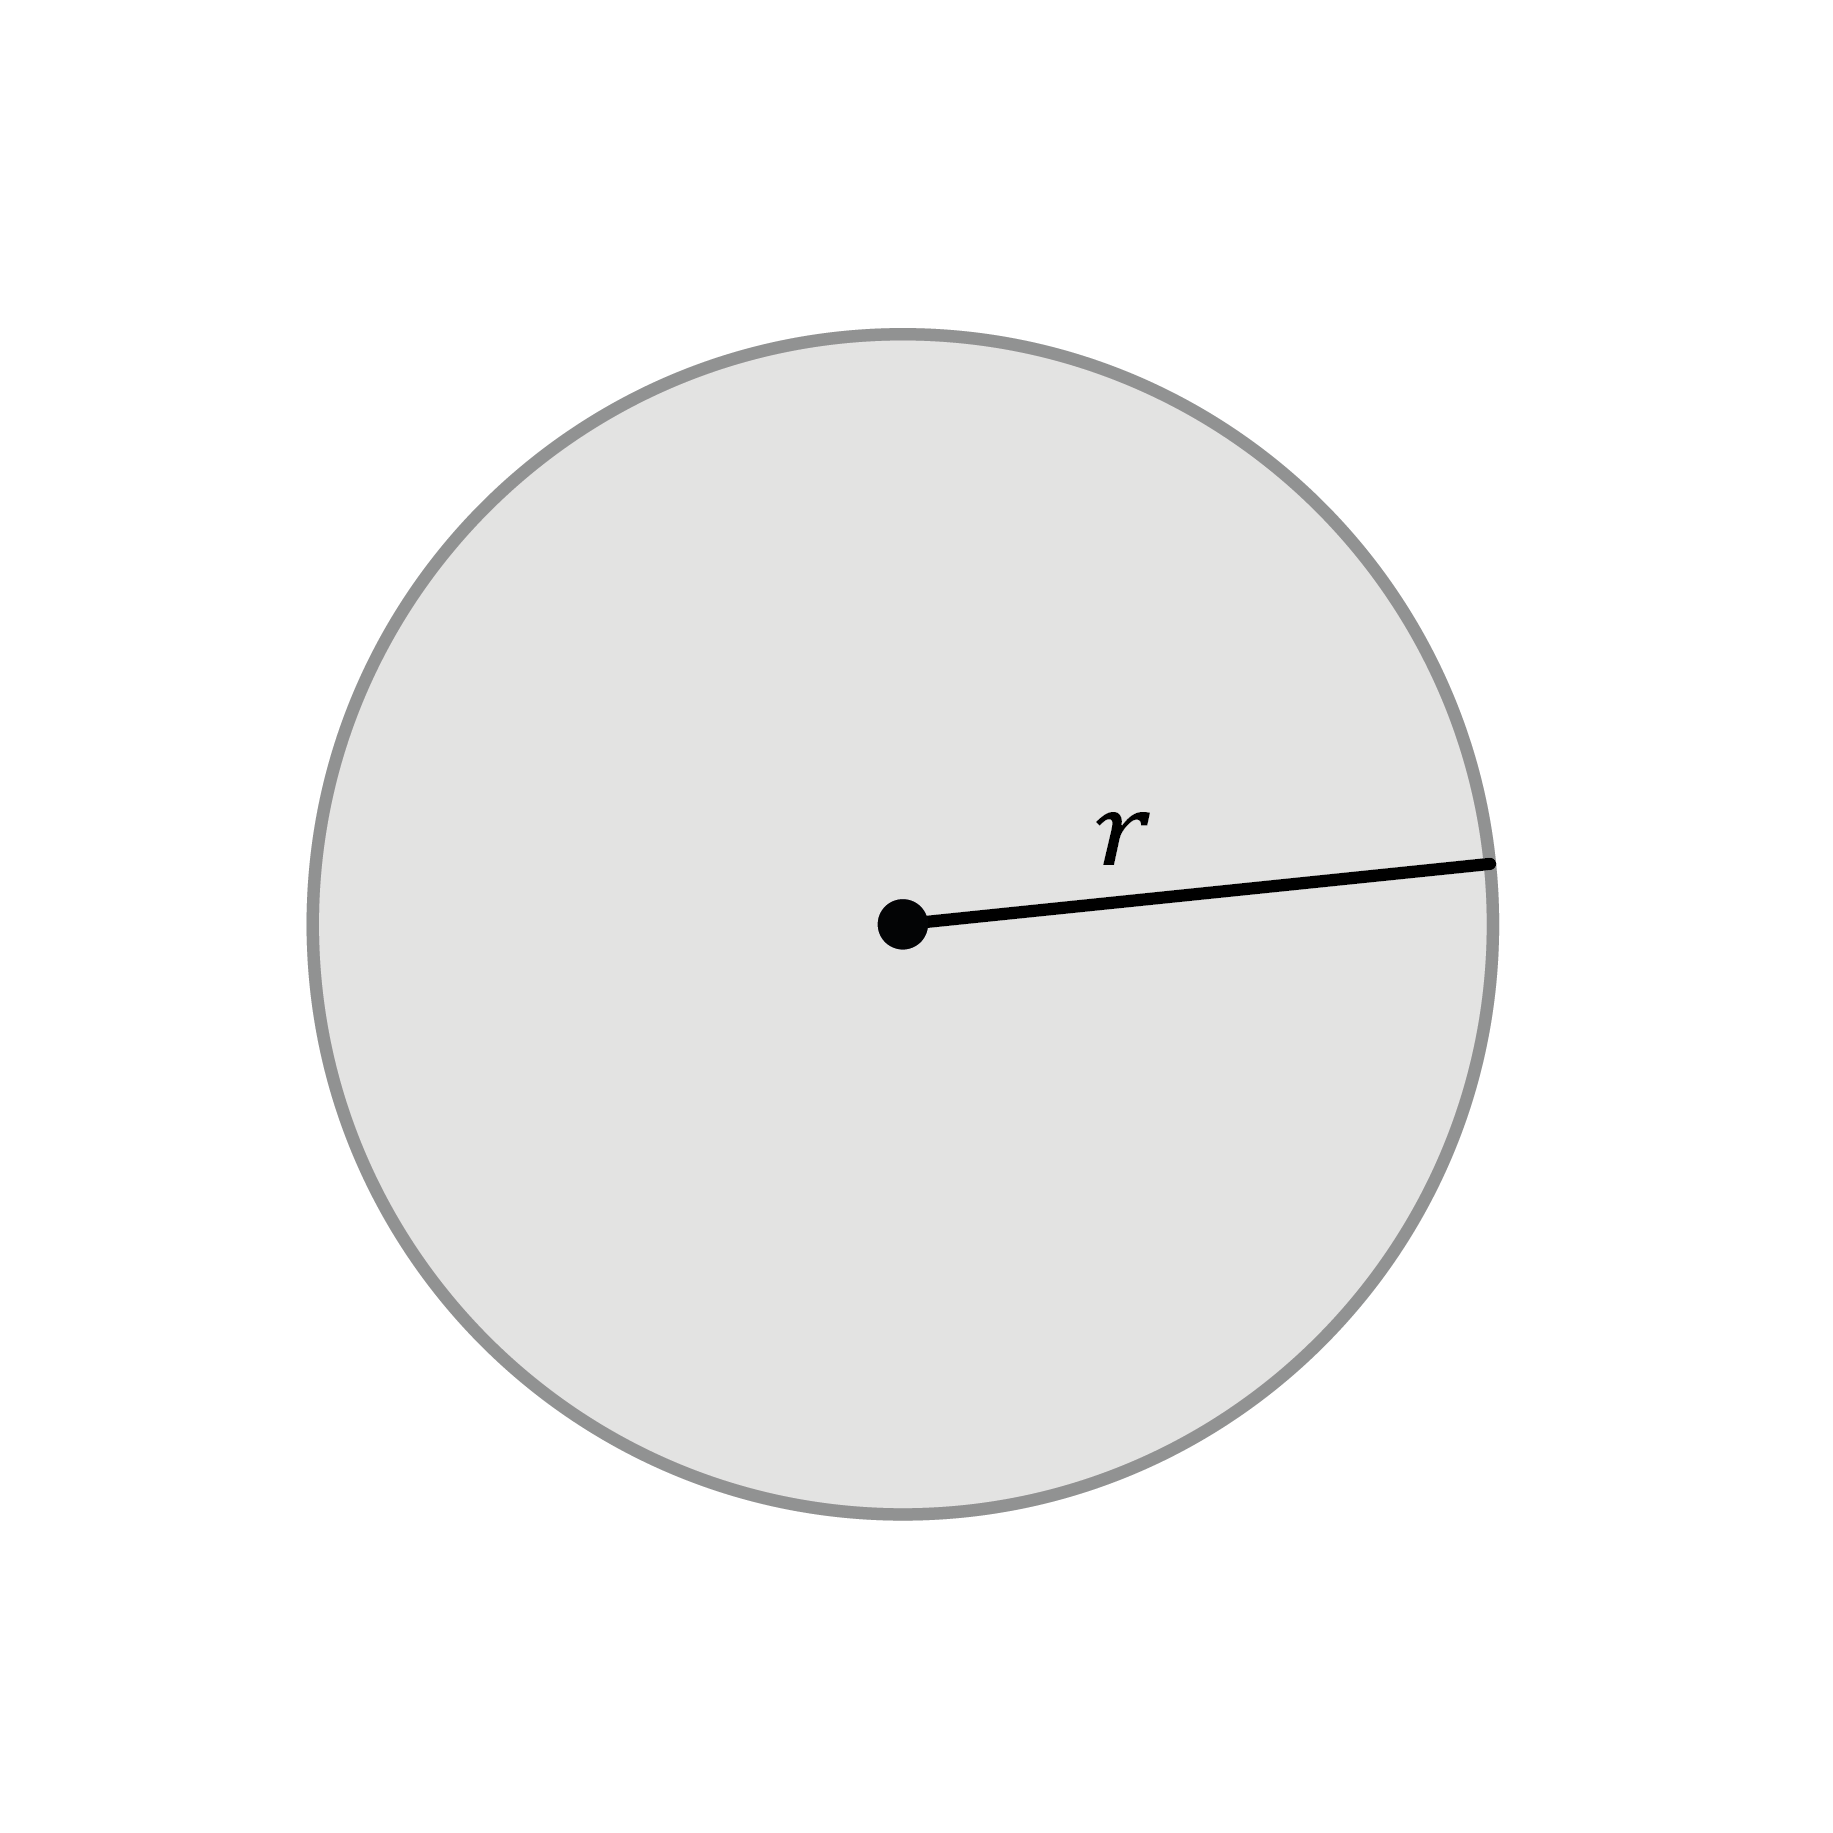 Maths; Shapes; KS3 Year 7; Circles: Area and circumference